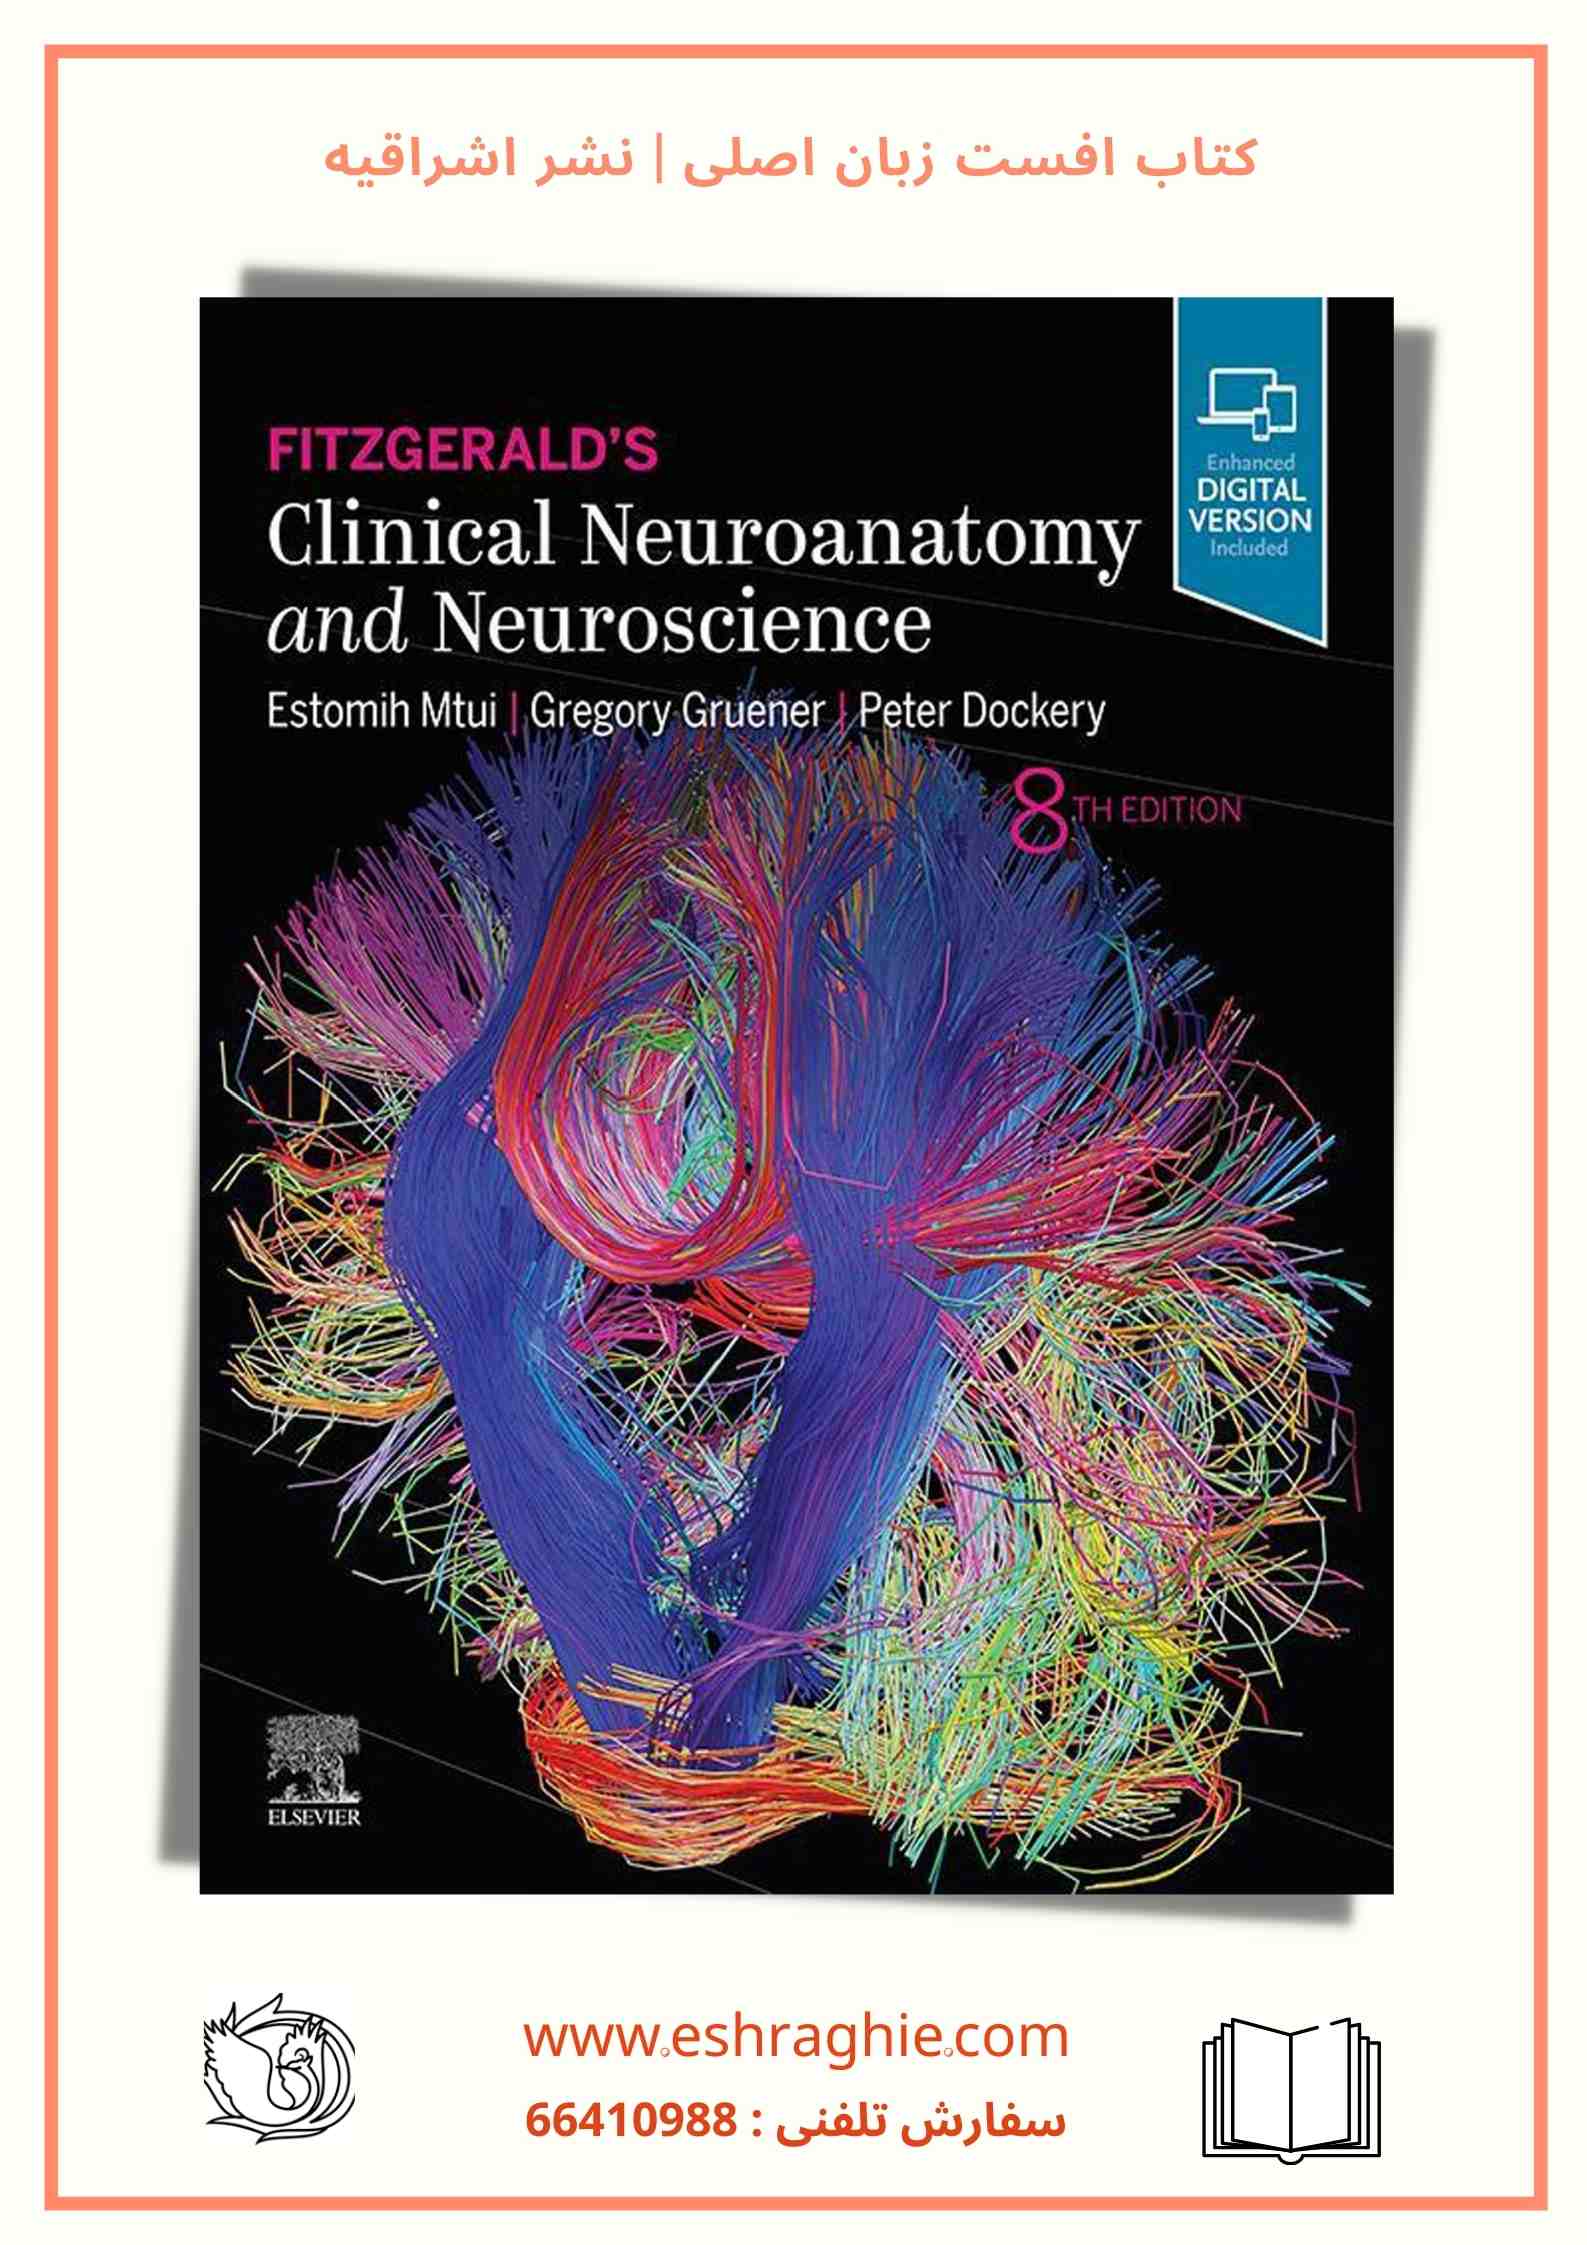 Fitzgerald's Clinical Neuroanatomy and Neuroscience 8th Edition